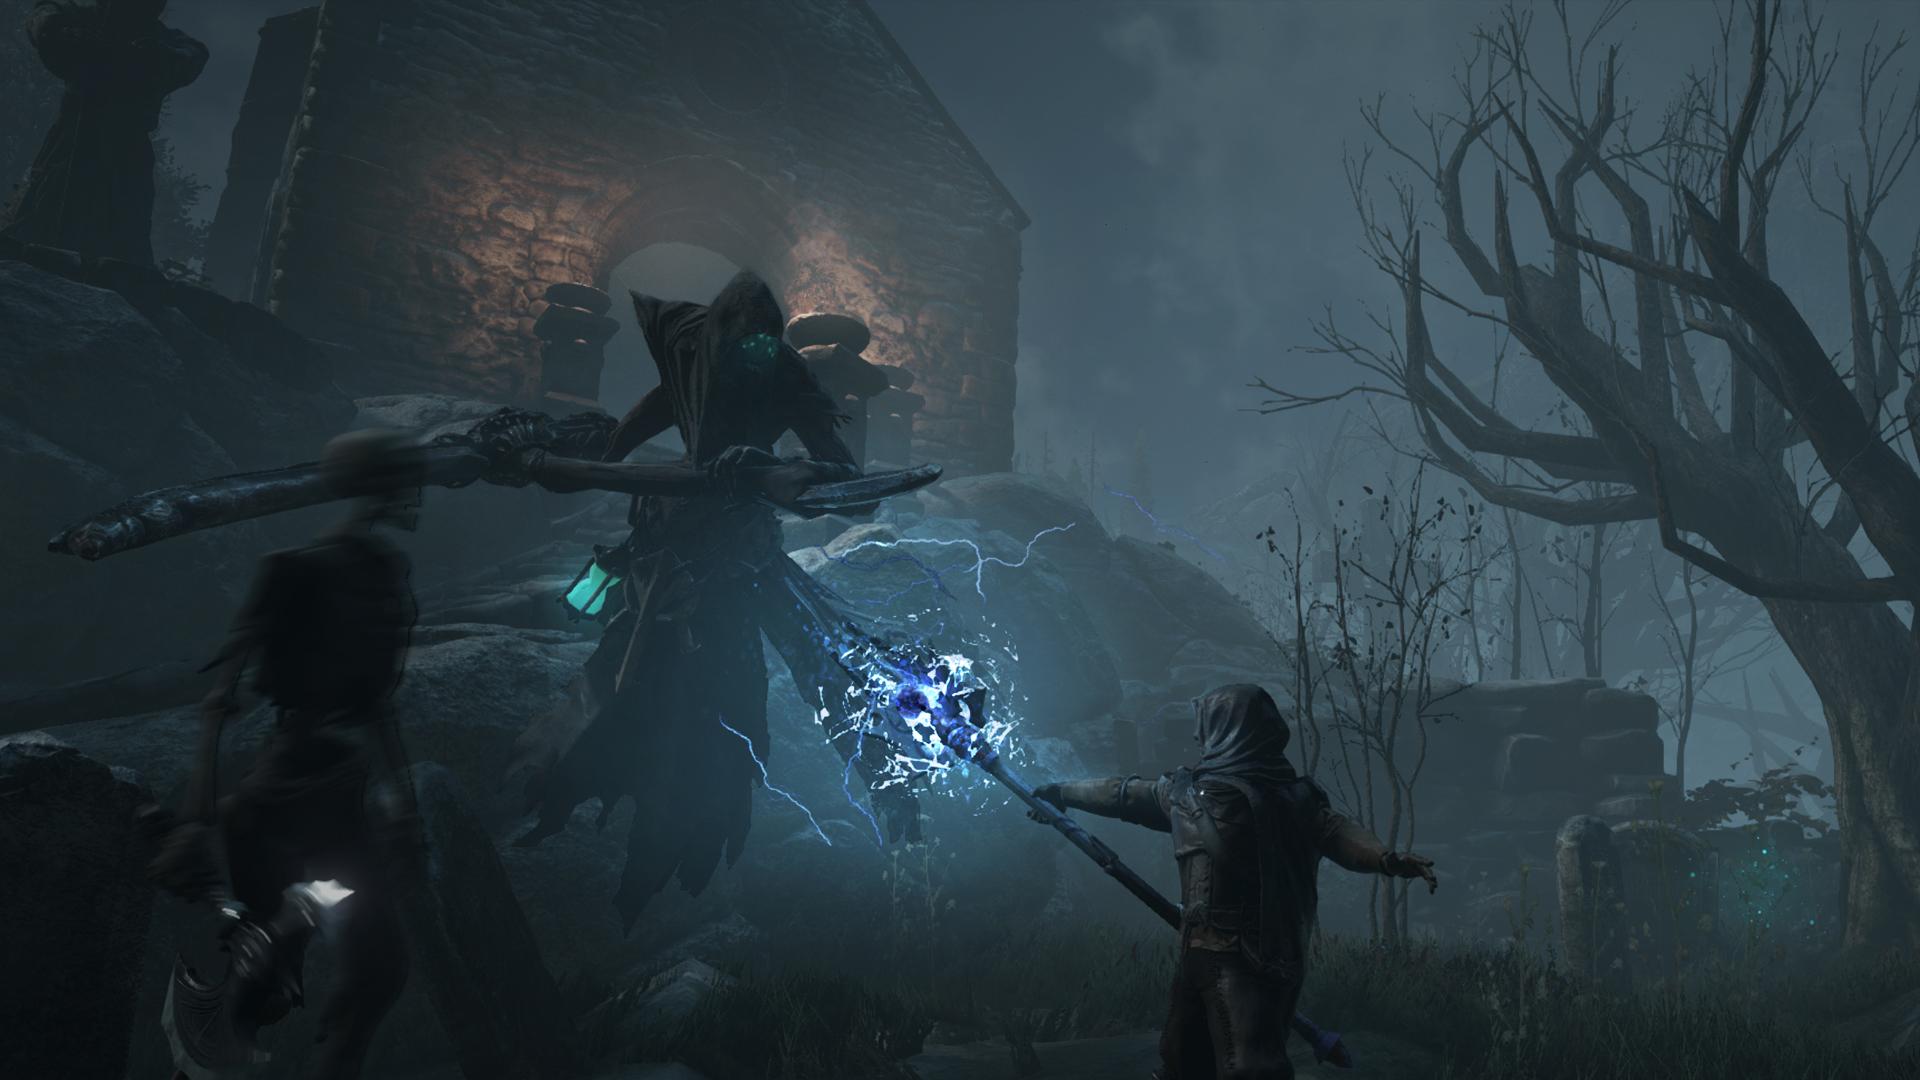 Screenshot №27 from game Dark and Light